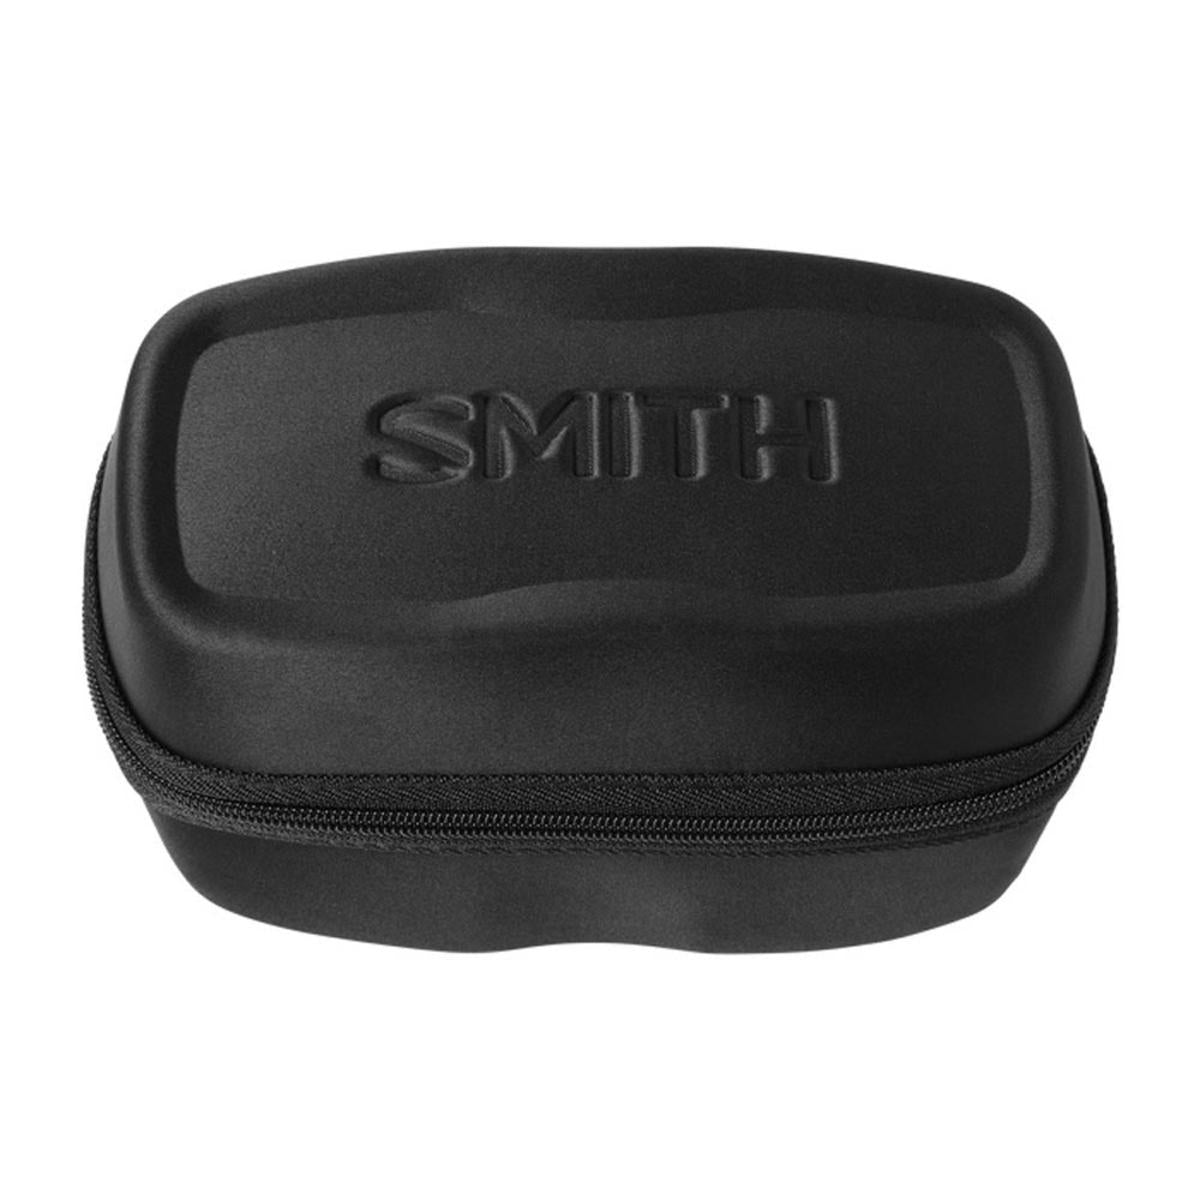 Smith Optics 4D MAG Goggles ChromaPop Everyday Green - White Vapor Frame